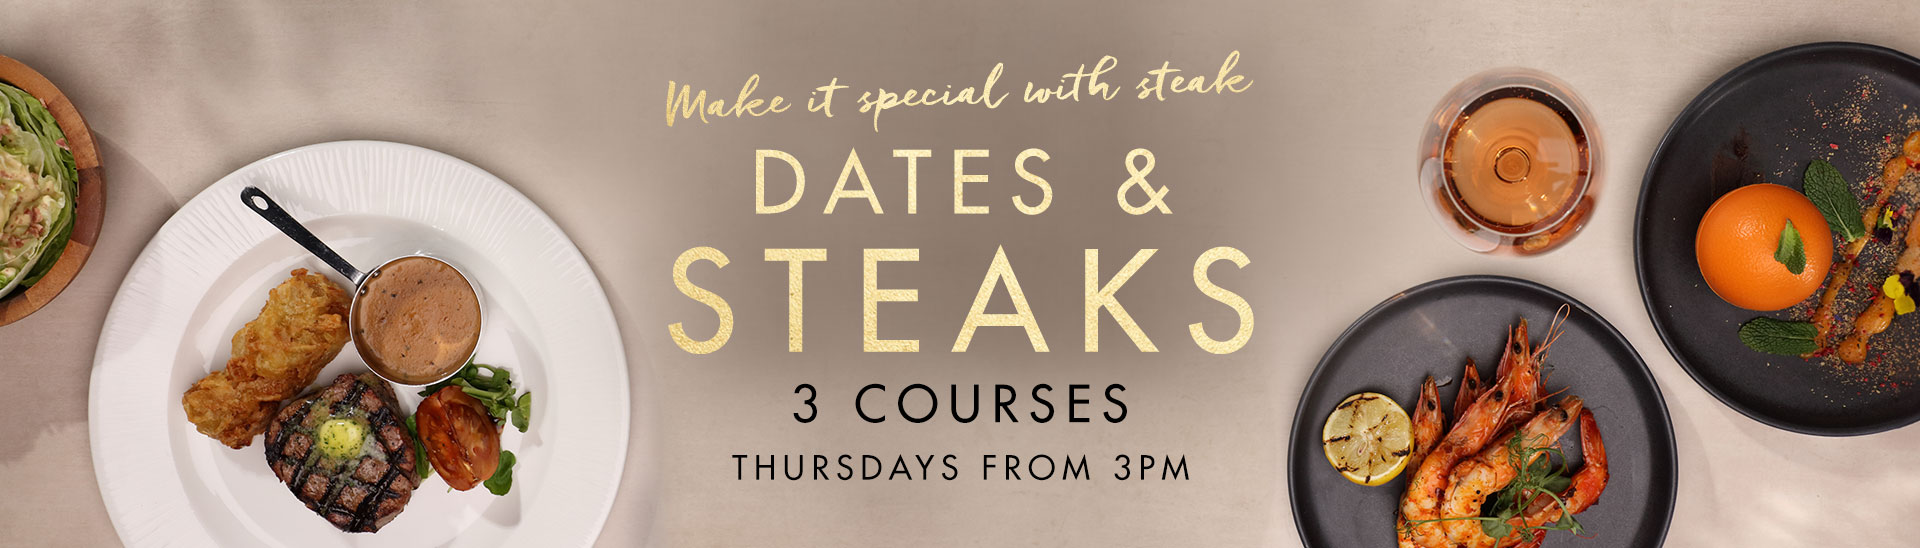 Dates & Steaks at Miller & Carter Newcastle